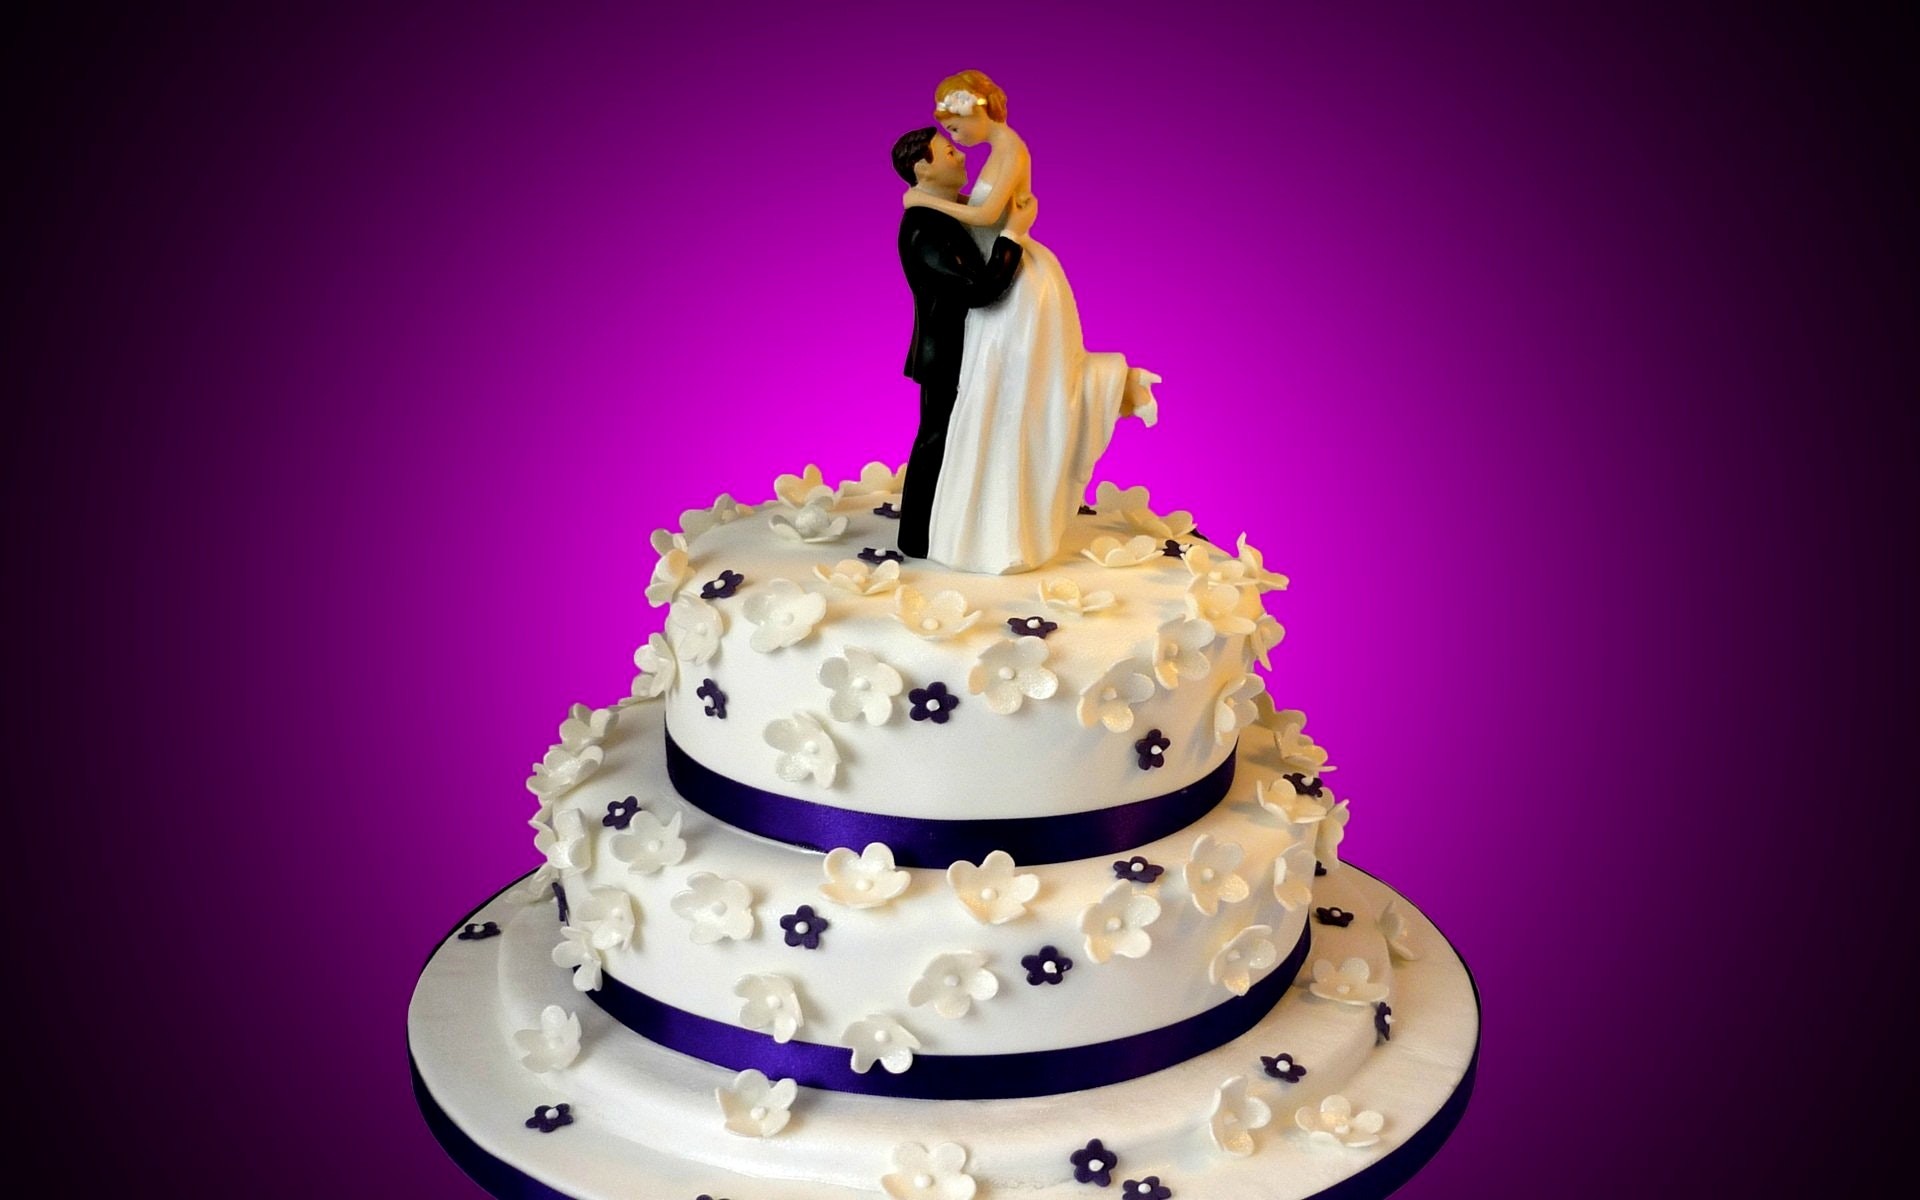 matrimonio aniversario fondos de pantalla descargar,pastel,decoración de pasteles,pasta de azúcar,formación de hielo,pastel de bodas